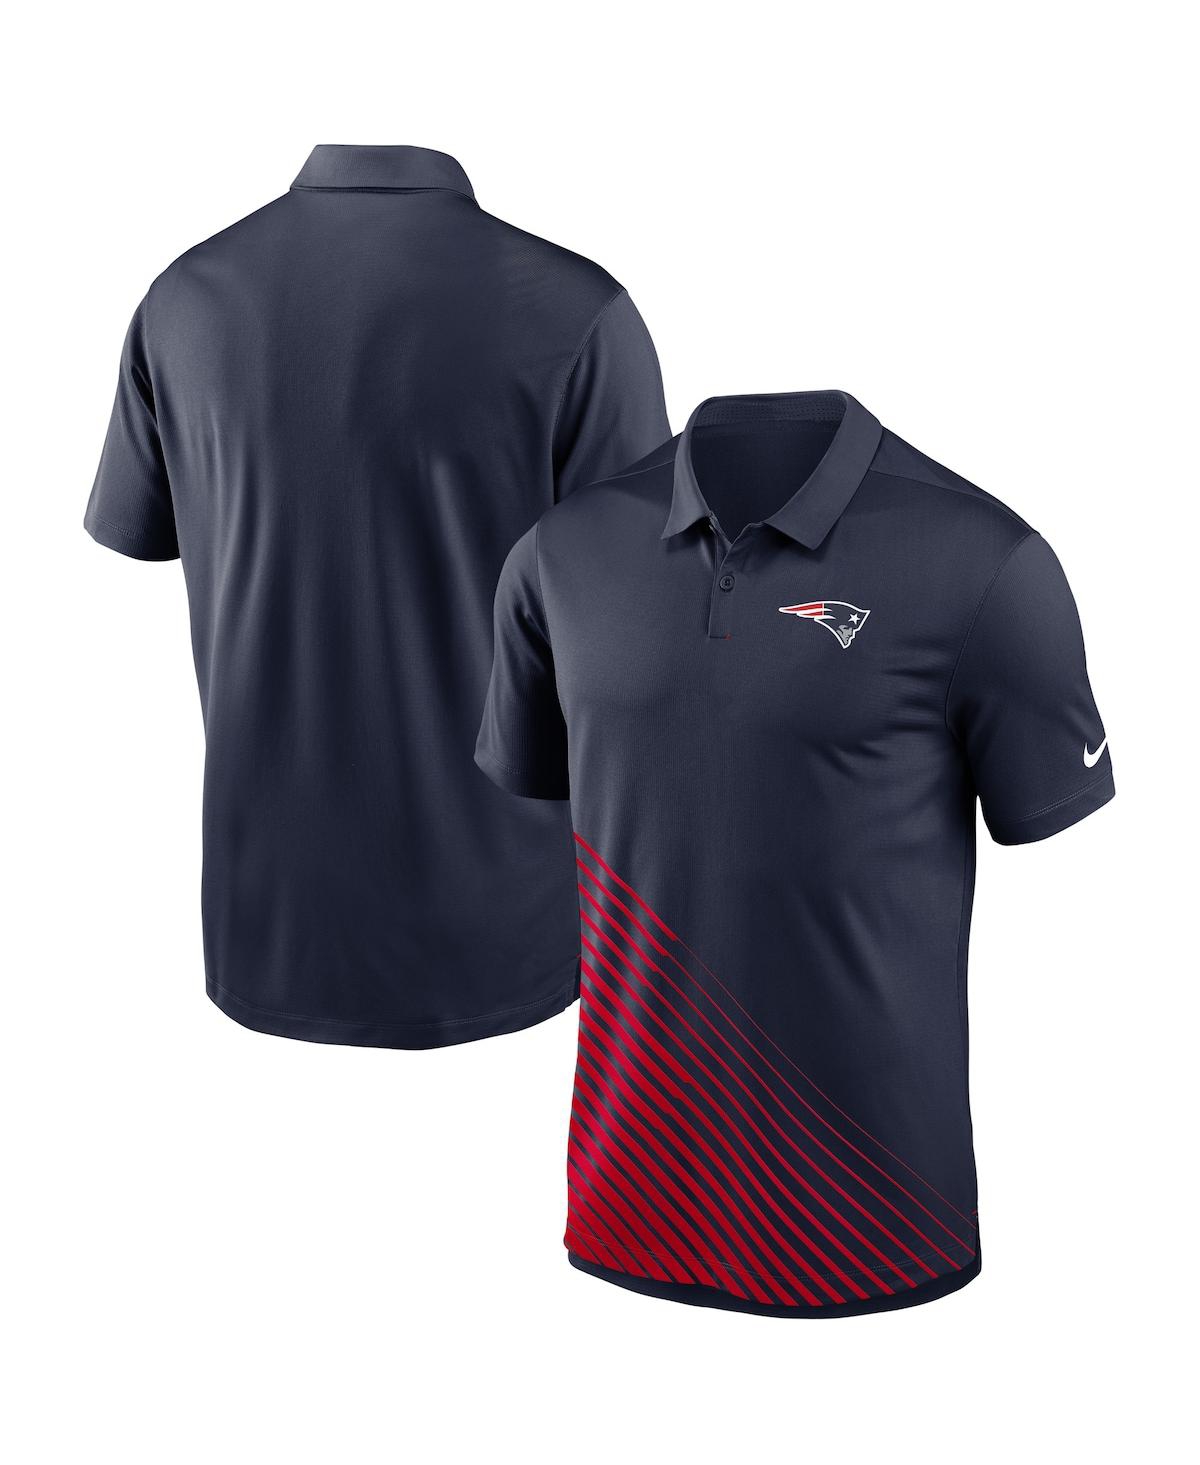 Men's Nike Navy New England Patriots Vapor Performance Polo Shirt - Navy